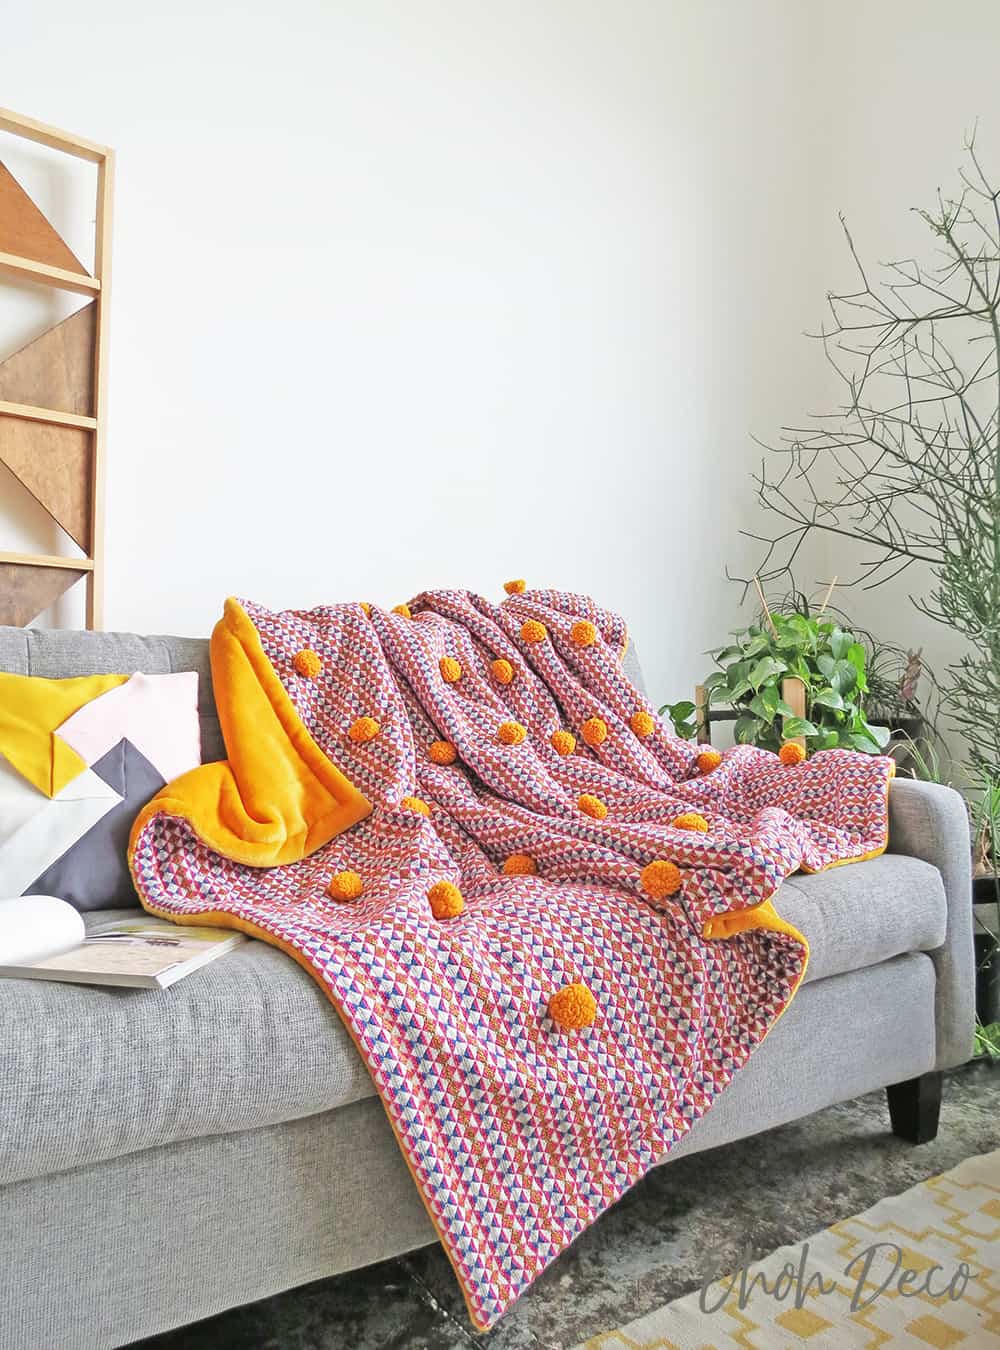 DIY sew pompoms blanket 11 - Ohoh deco.